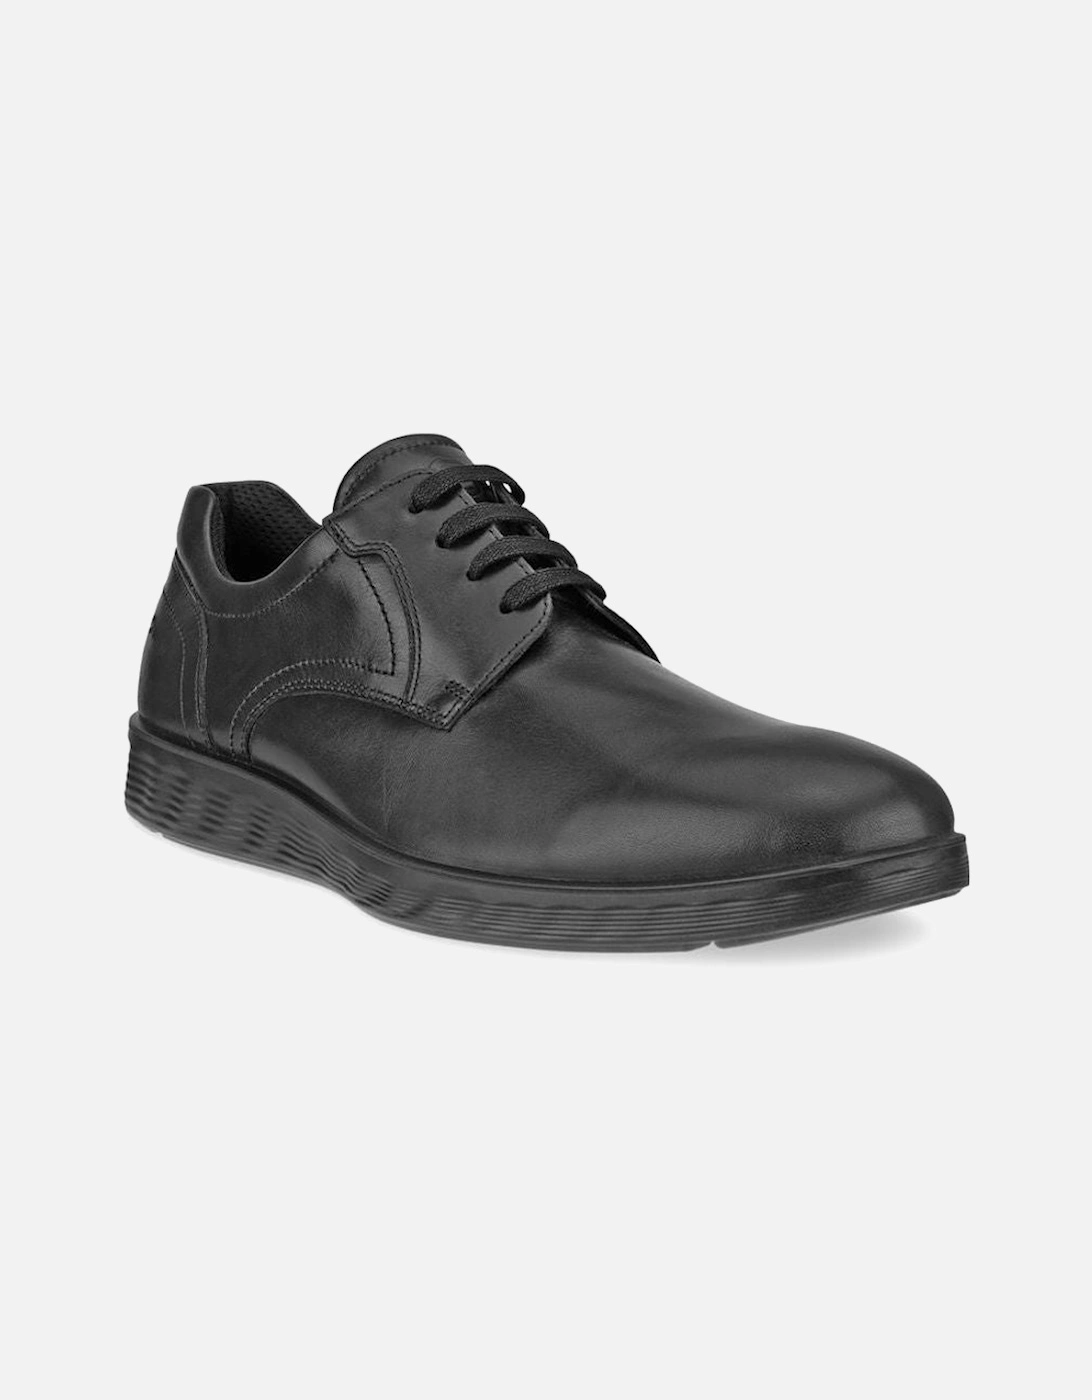 S Lite Gortex Shoe 520364-01001 in Black leather, 2 of 1